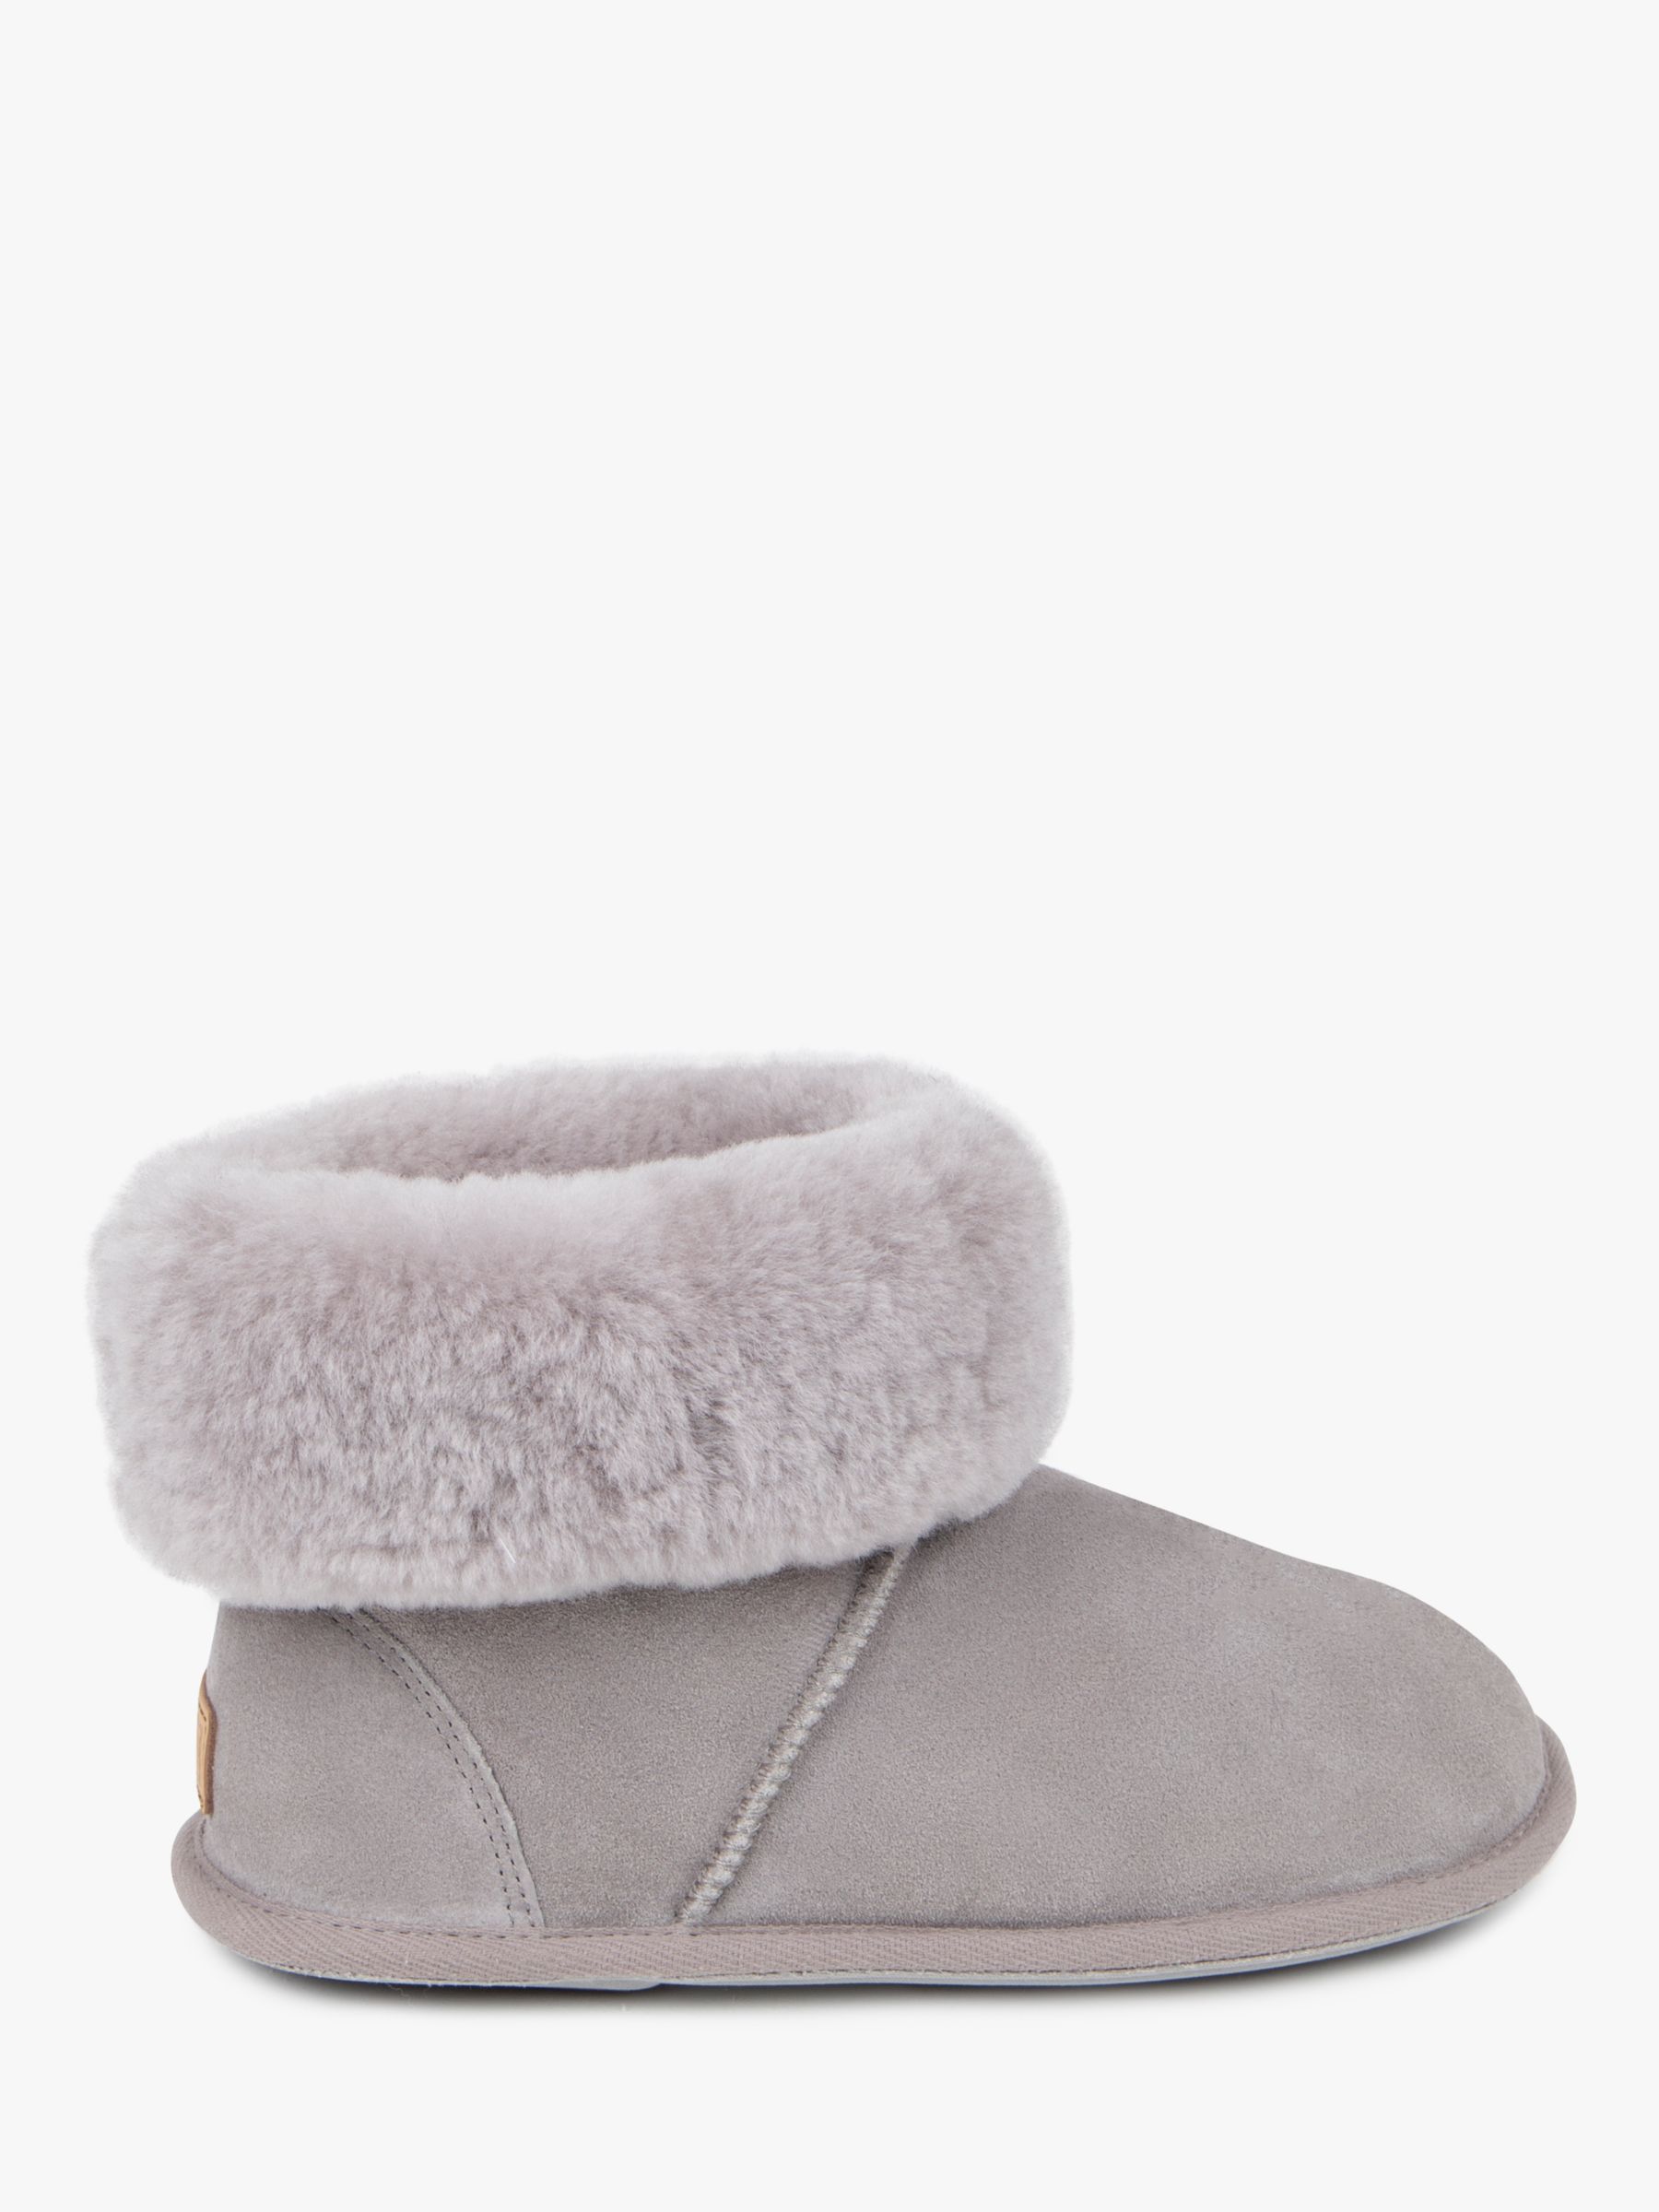 Grey Sheepskin Slipper Boots | vlr.eng.br